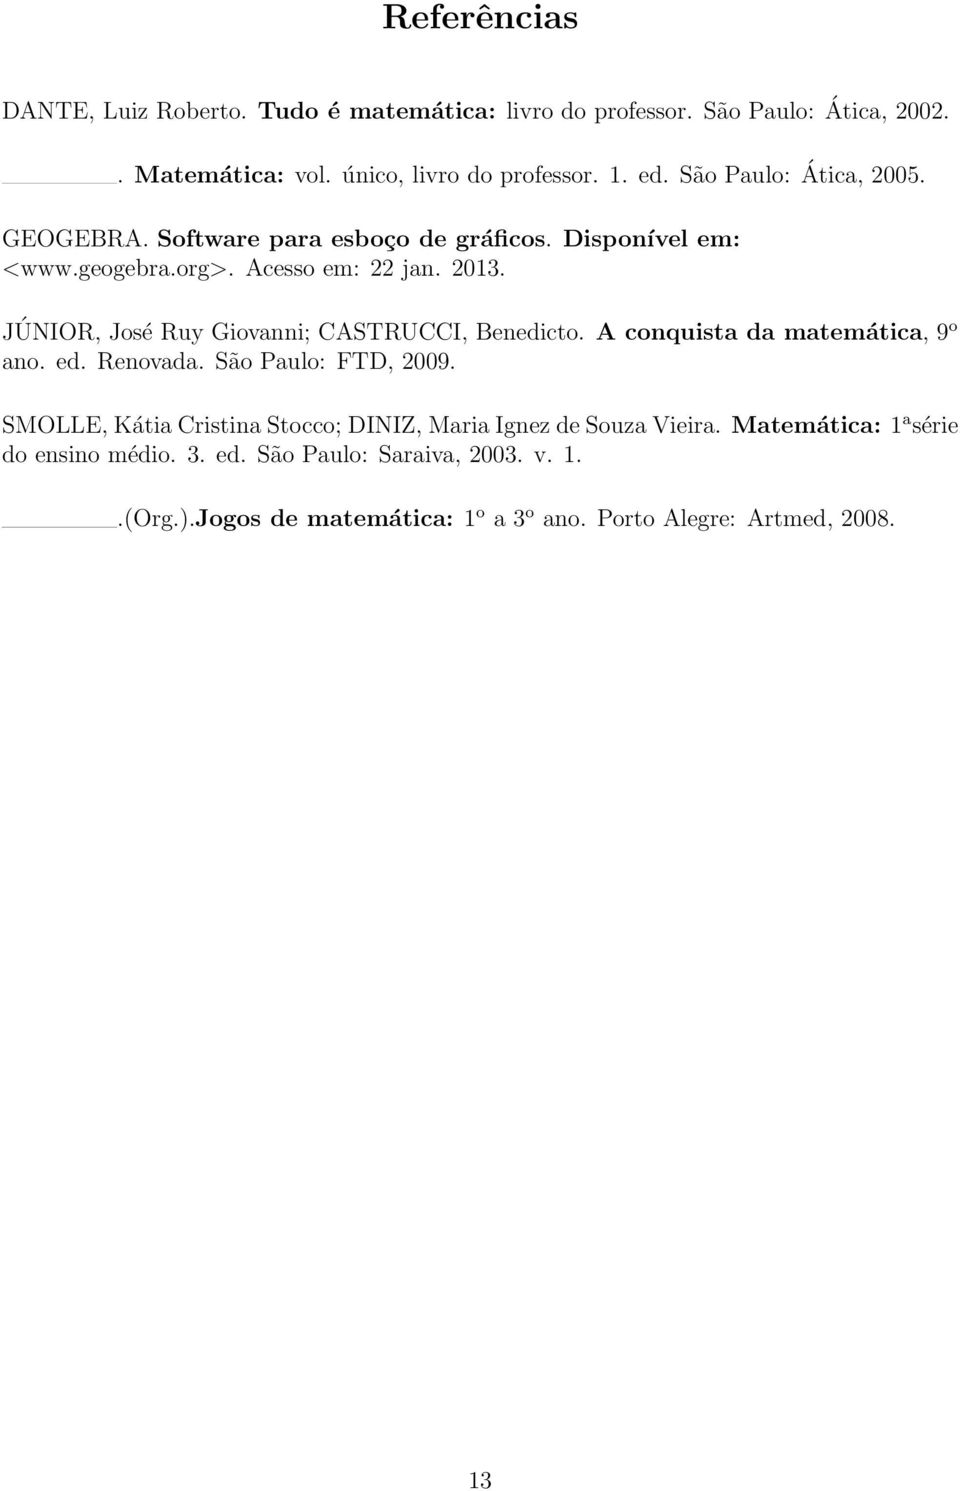 JÚNIOR, José Ruy Giovanni; CASTRUCCI, Benedicto. A conquista da matemática, 9o ano. ed. Renovada. São Paulo: FTD, 009.